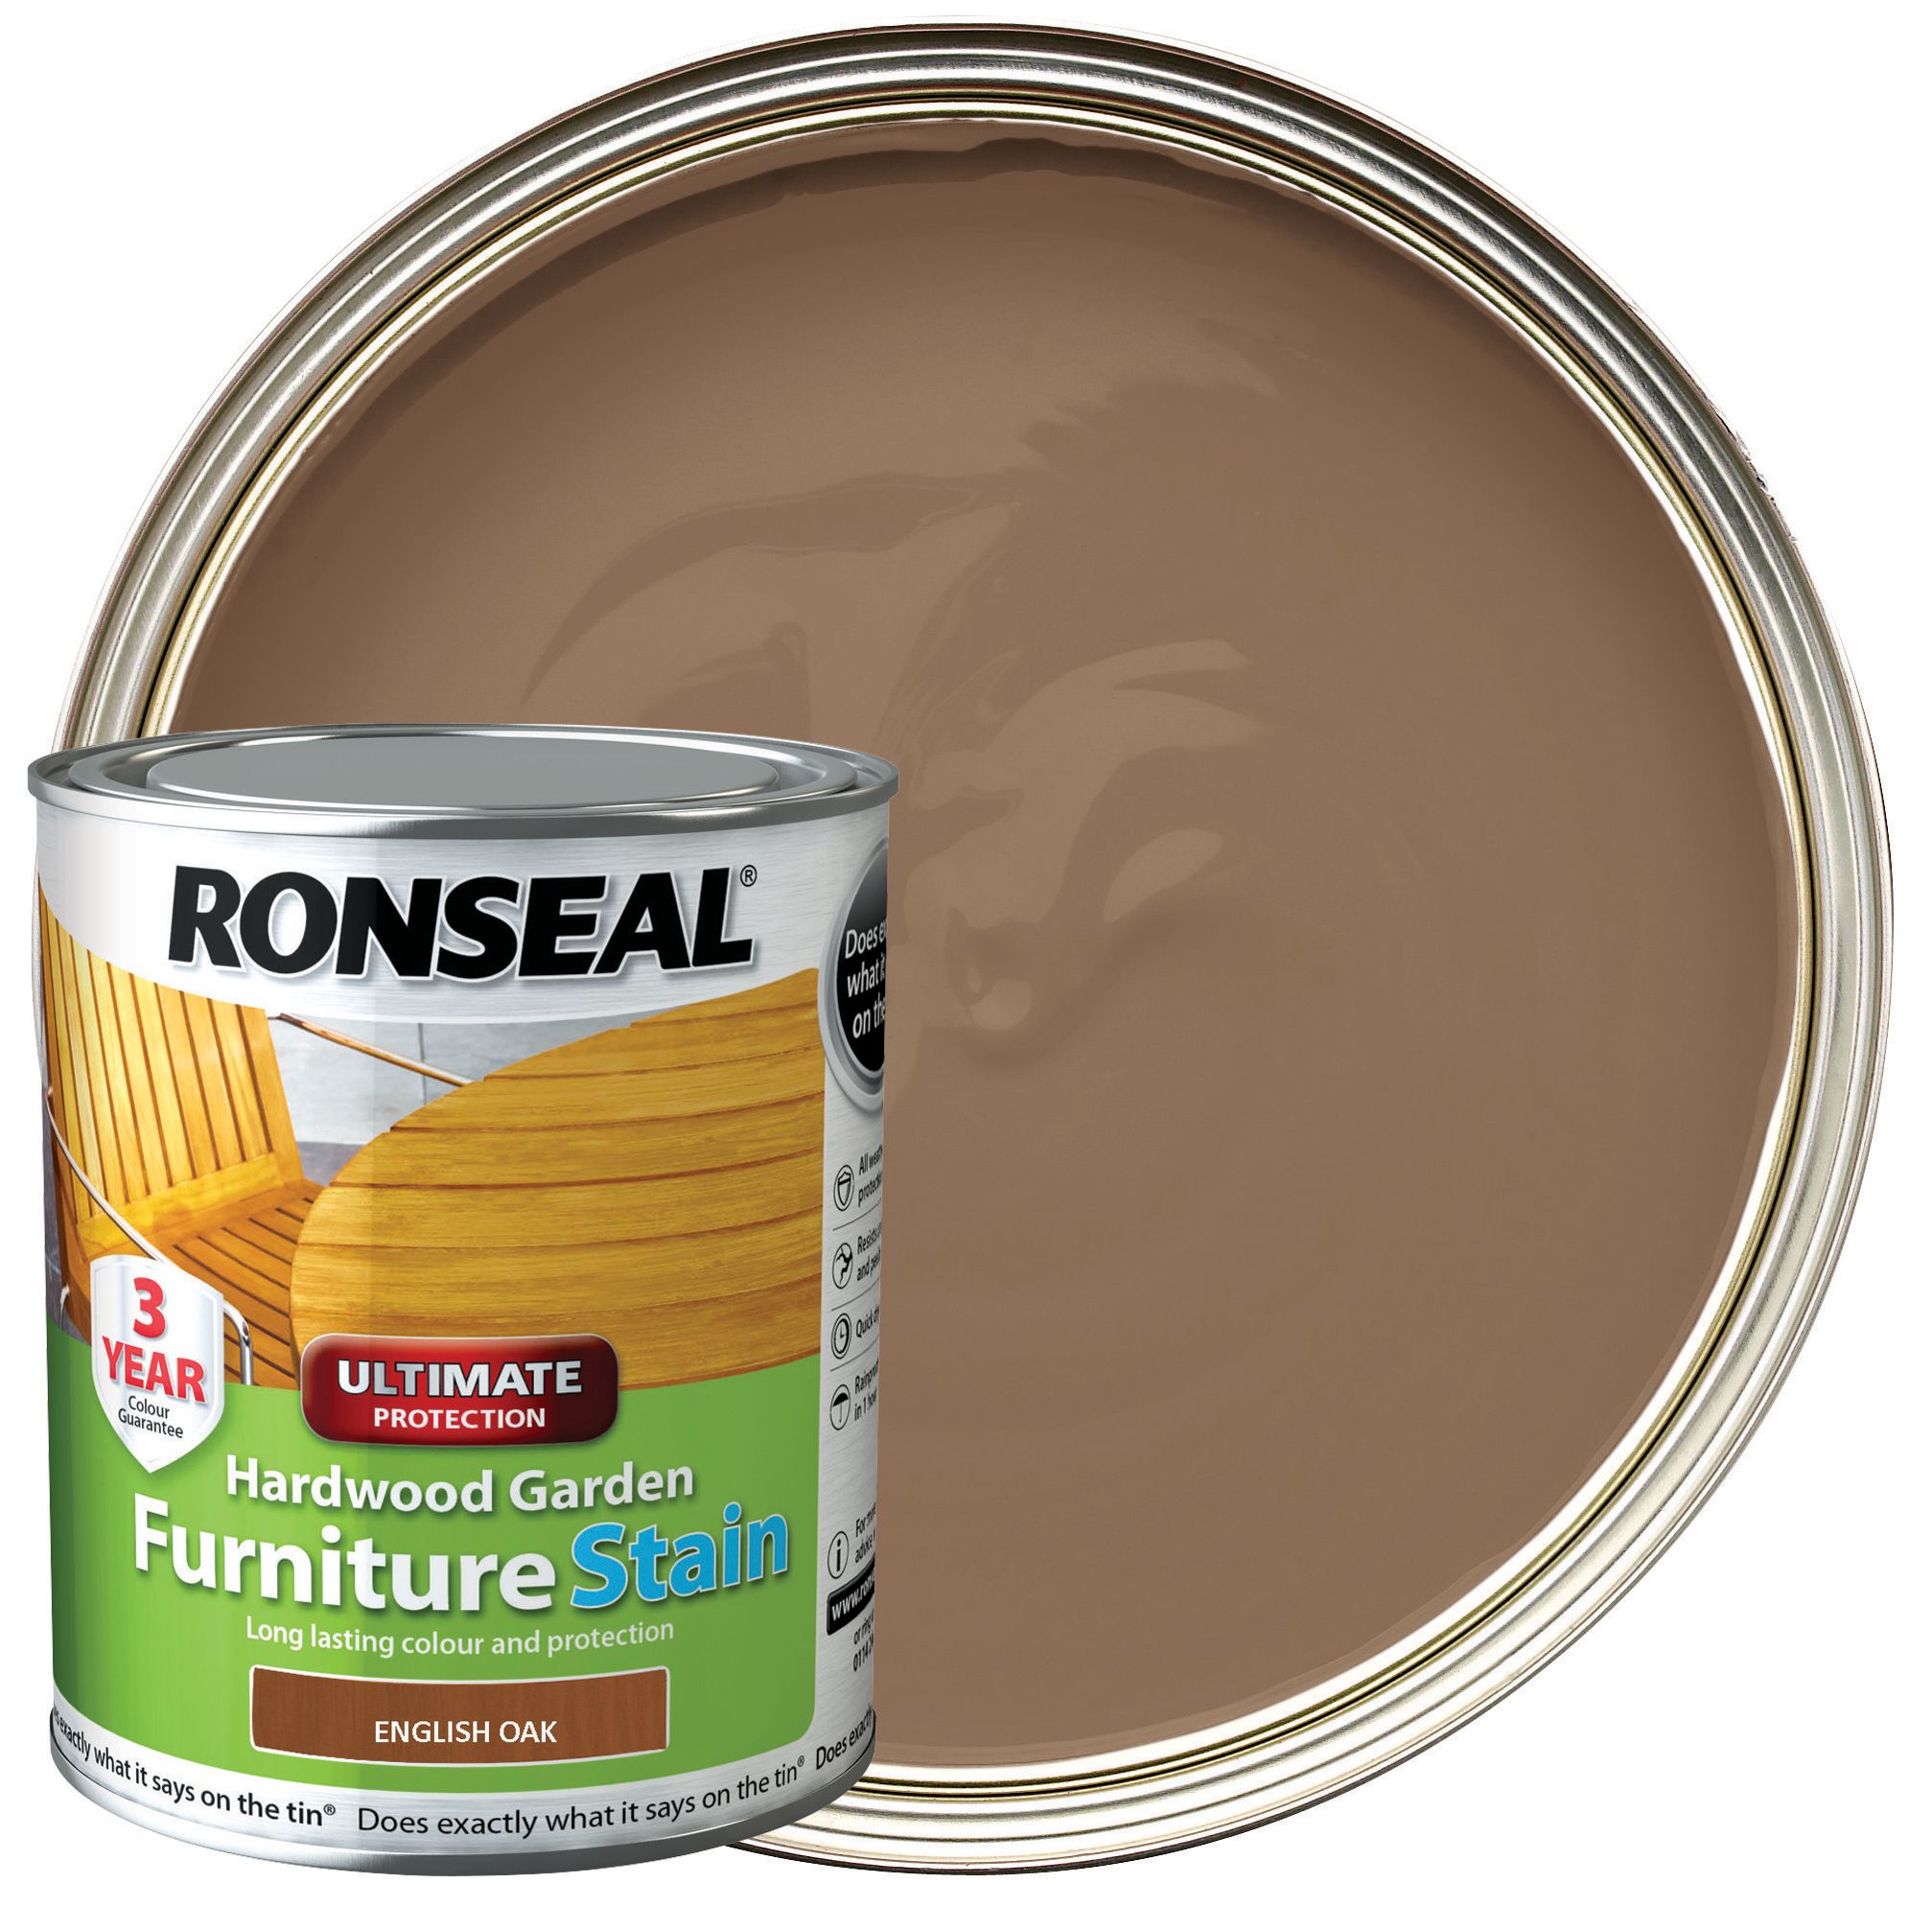 Image of Ronseal Ultimate Protection Hardwood Garden Furniture Stain - English Oak 750ml